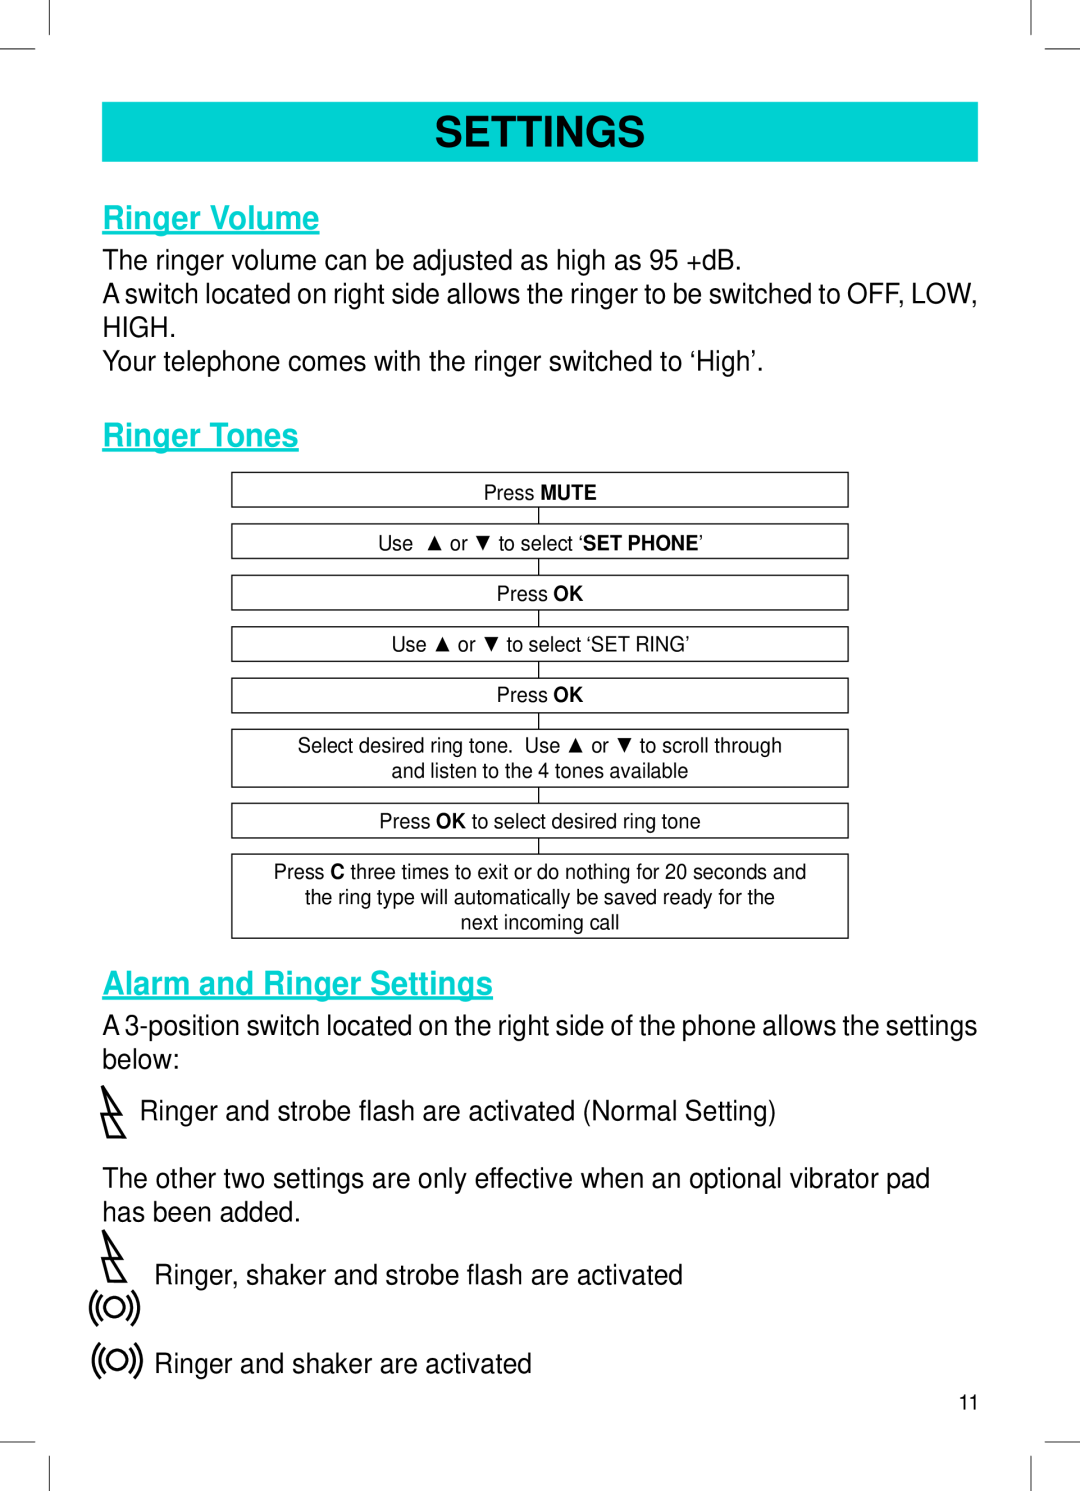 Geemarc AMPLI600 manual Ringer Volume, Ringer Tones, Alarm and Ringer Settings 